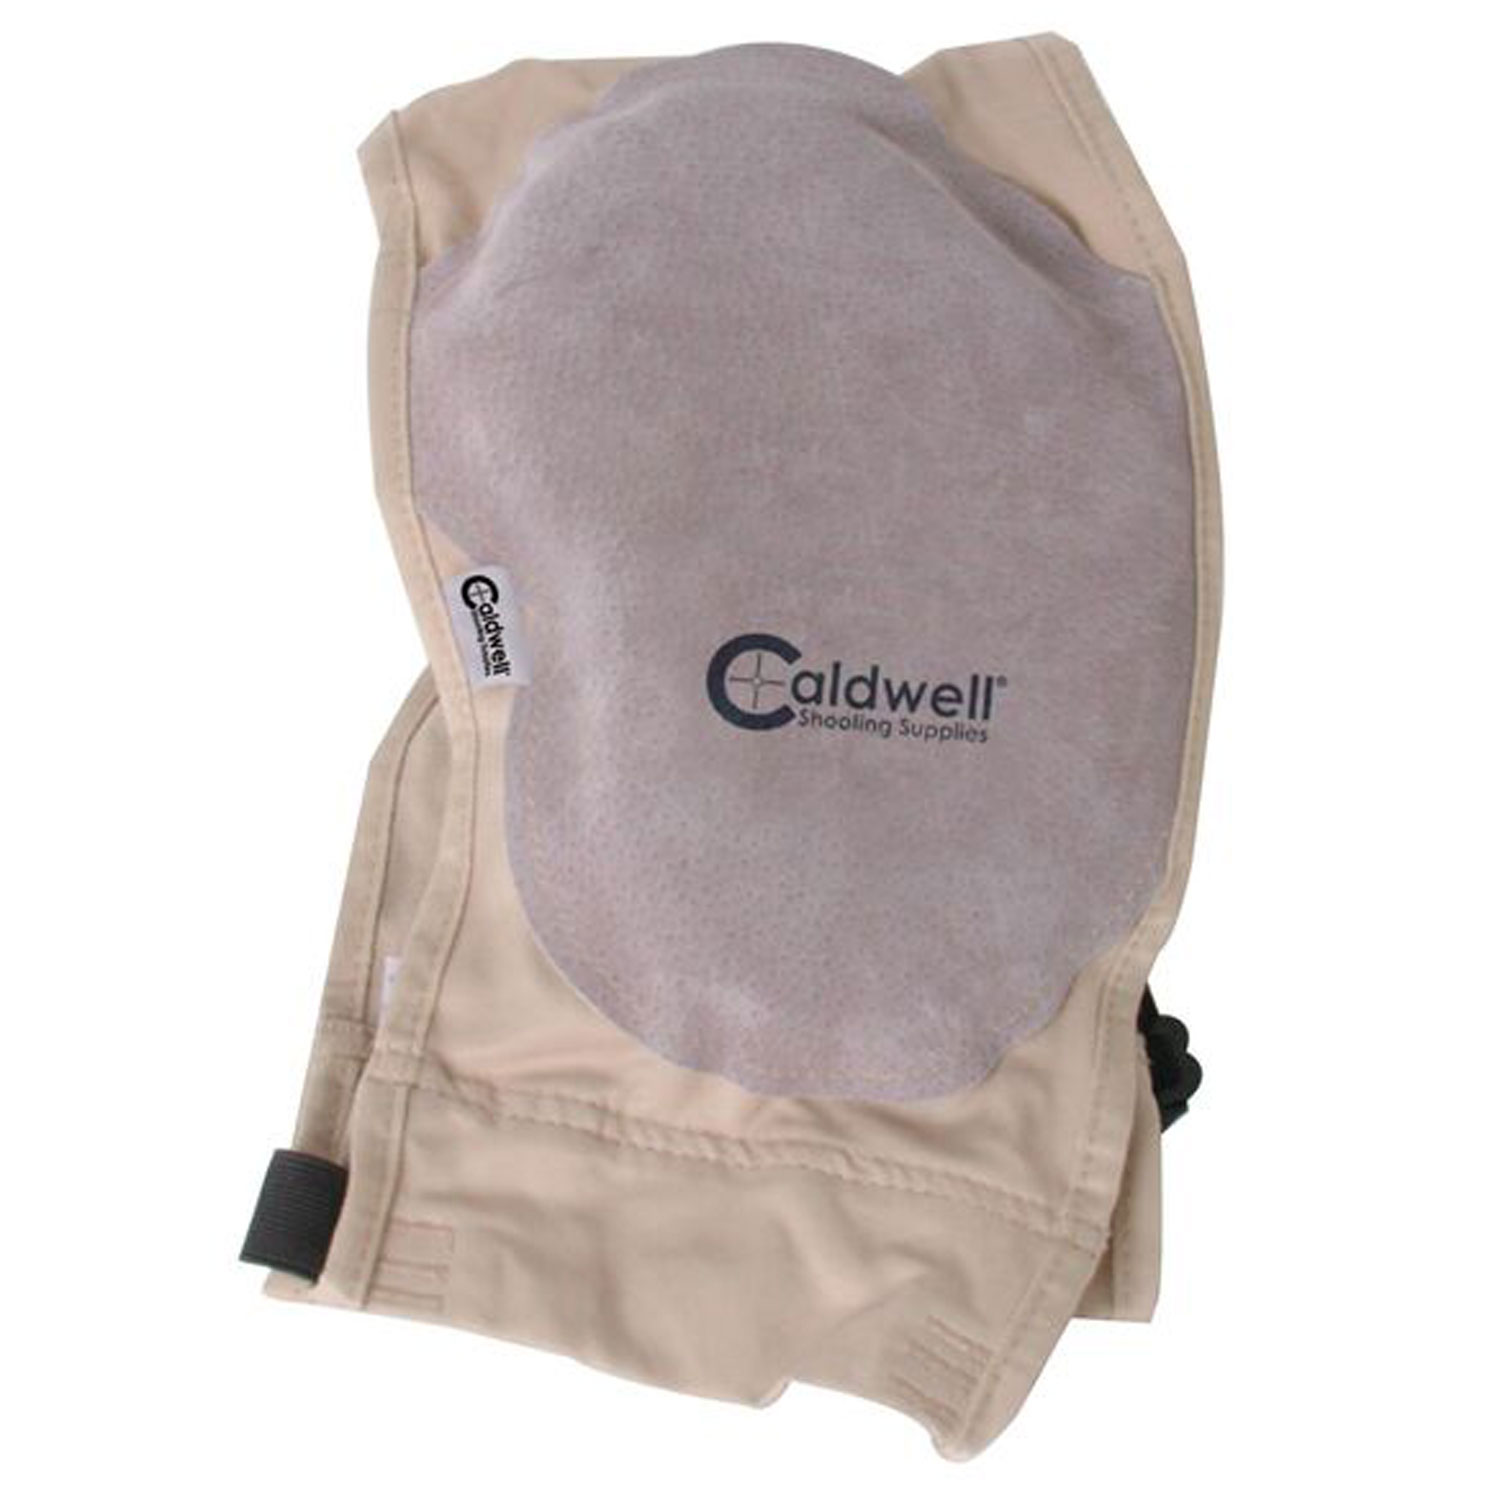 Caldwell 330110 Super Mag Plus Recoil Shield Tan Cloth w/Leather Pad Ambidextrous